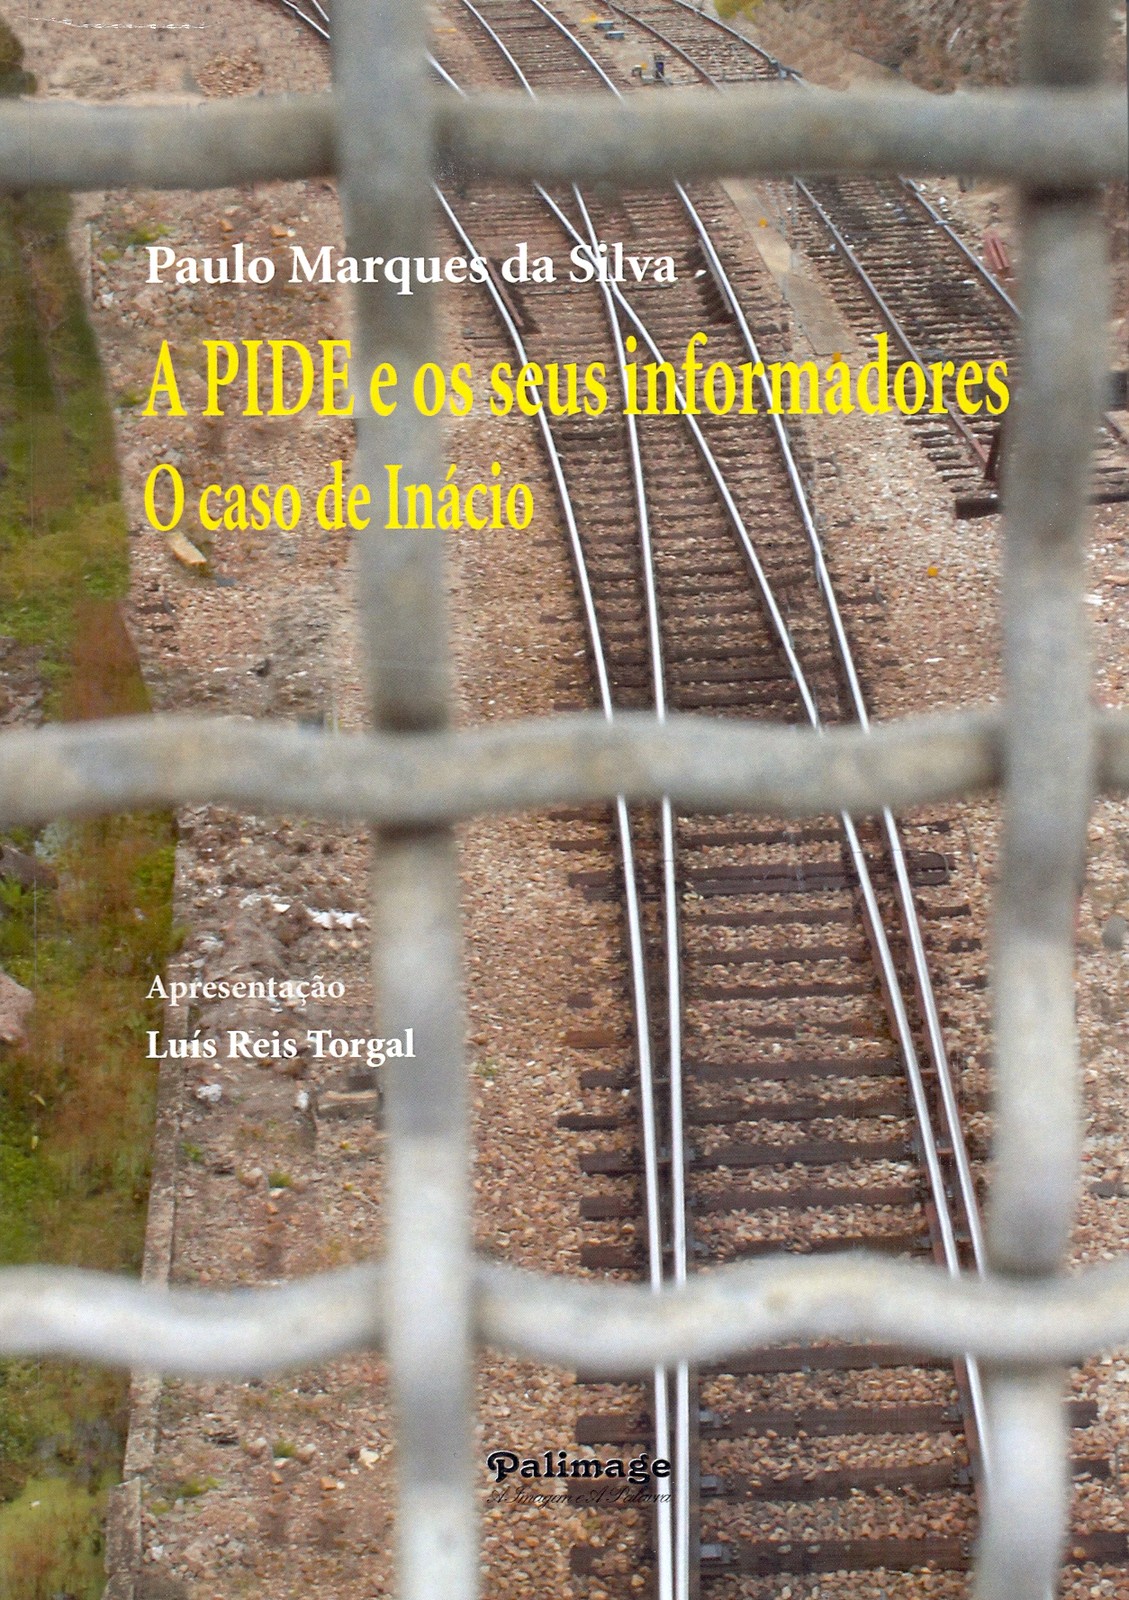 Paulo Marques da Silva - A Pide e os seus informadores, O caso de Inácio